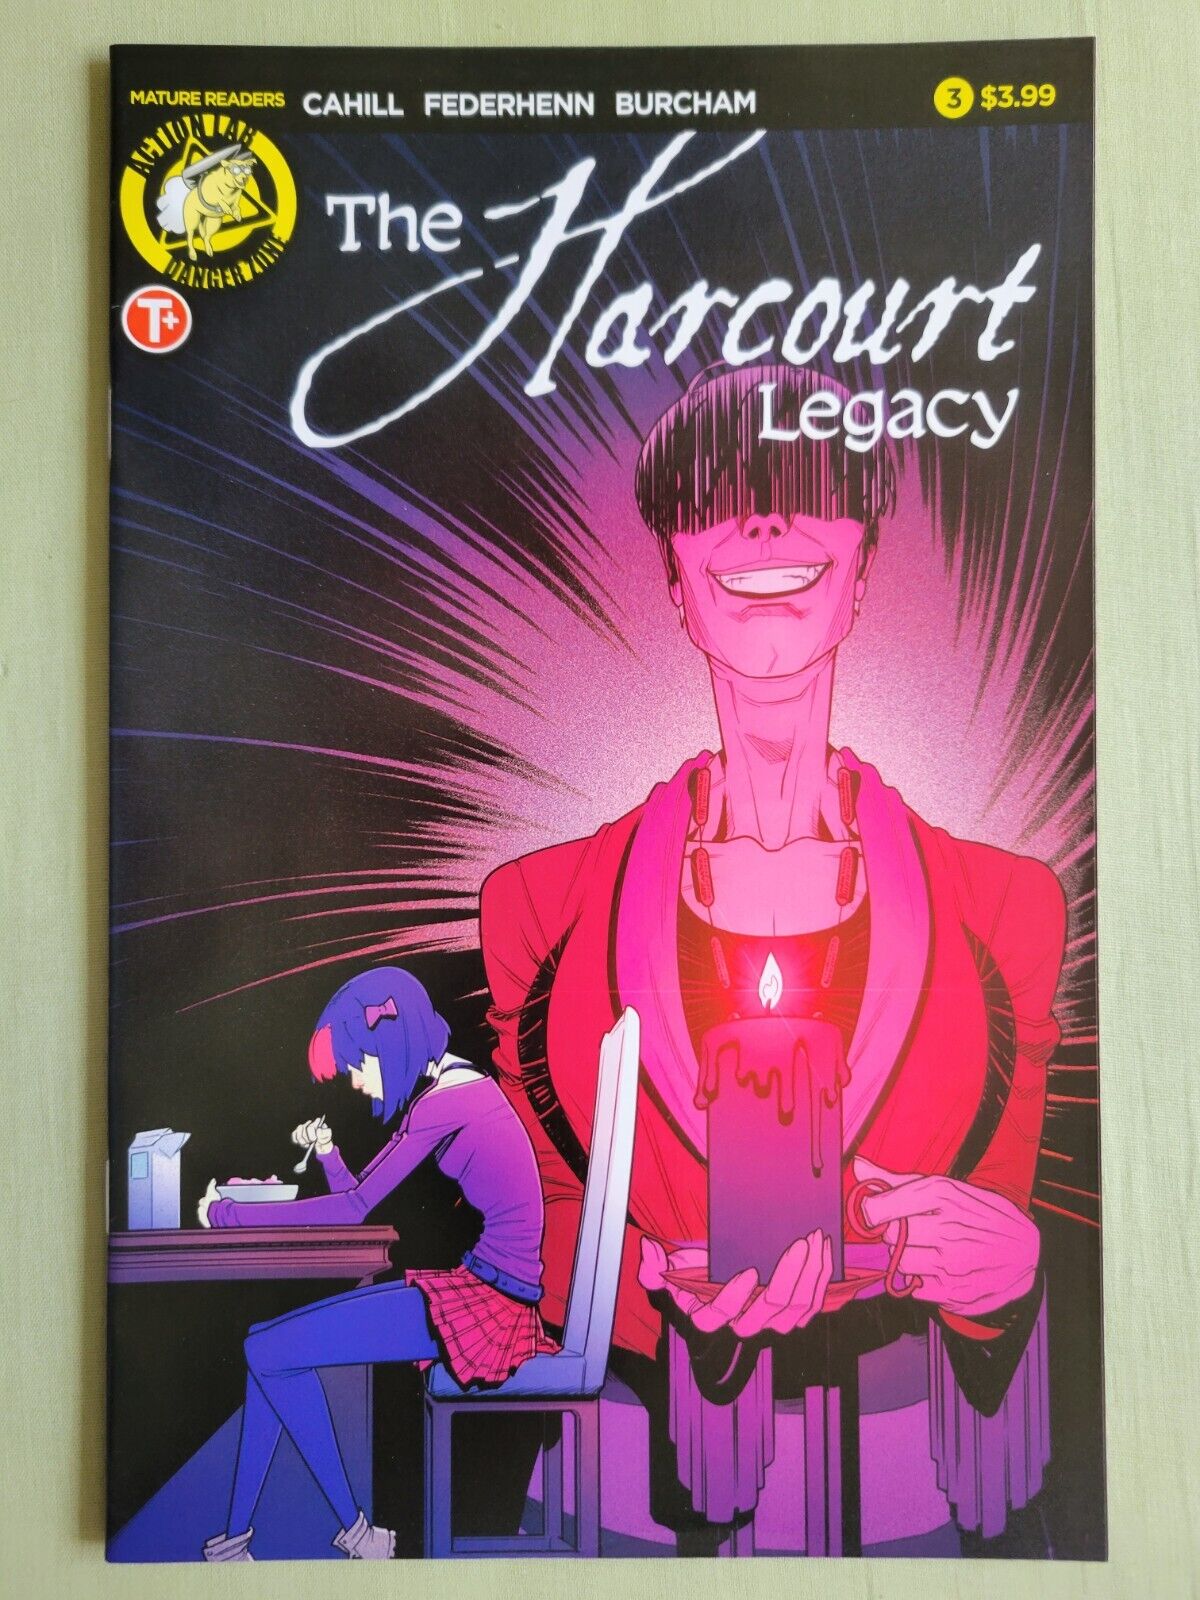 Harcourt Legacy #1